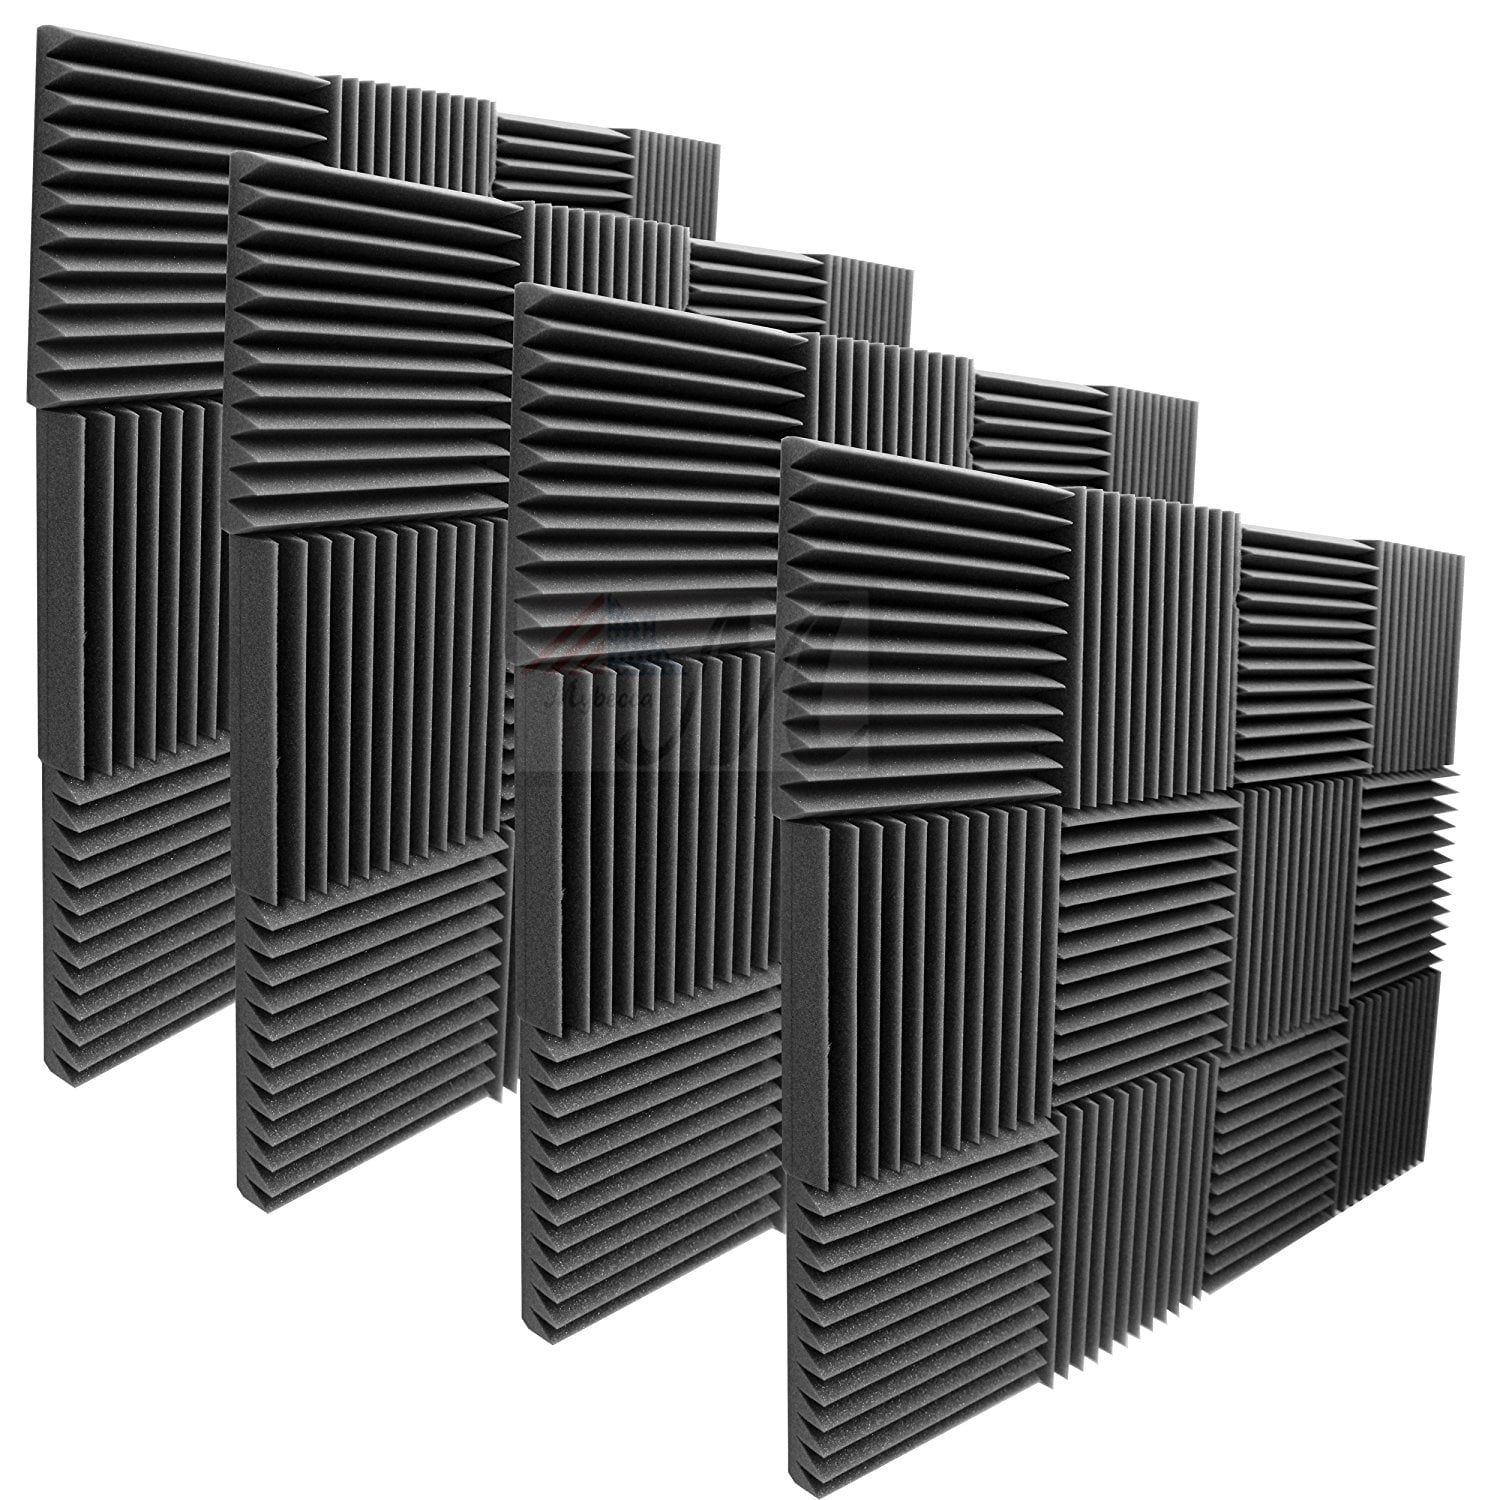 50PCS Acoustic Foam Panel Wedge Bass Trap Studio Soundproofing Sponge Wall Tiles 